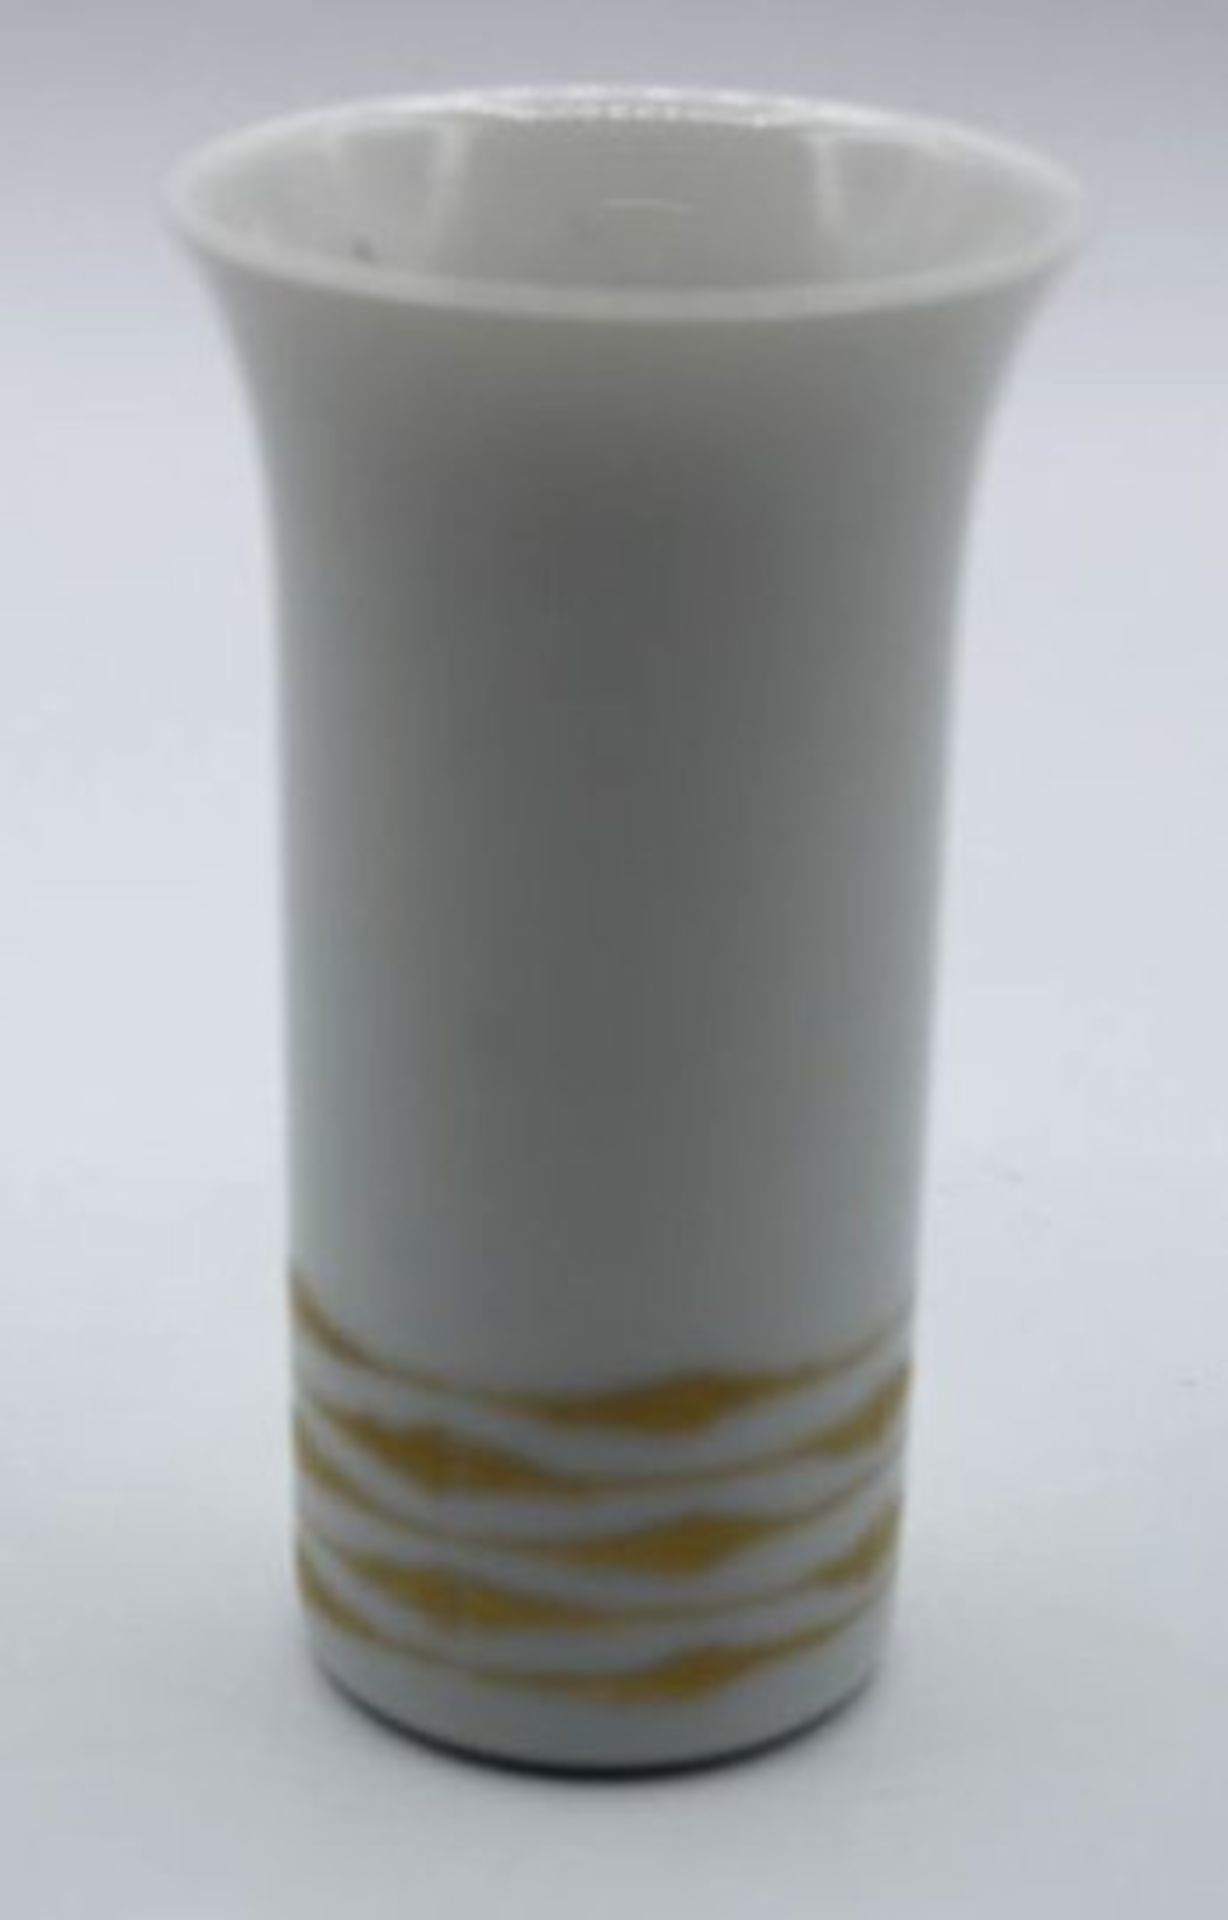 kl. Vase, Rosenthal studio-line, H-8,5cm